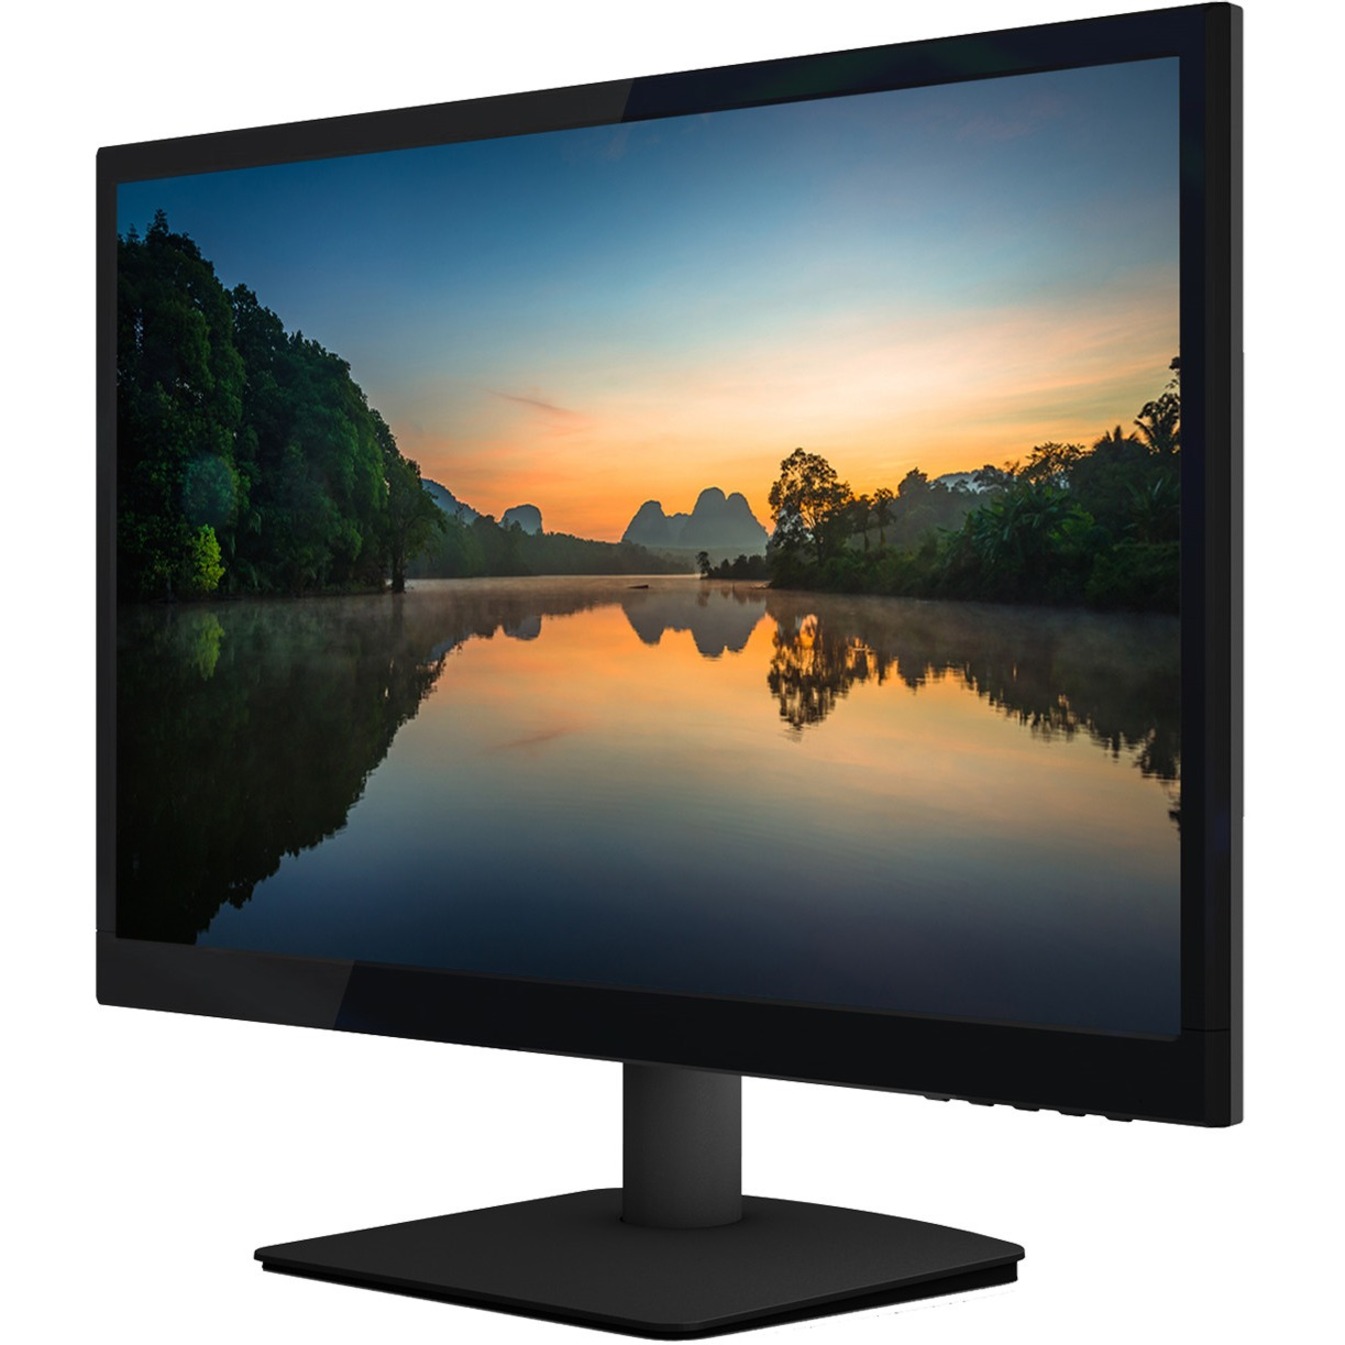 Planar PLL2250MW 22" Class Full HD LCD Monitor, 16:9, Black - image 1 of 4